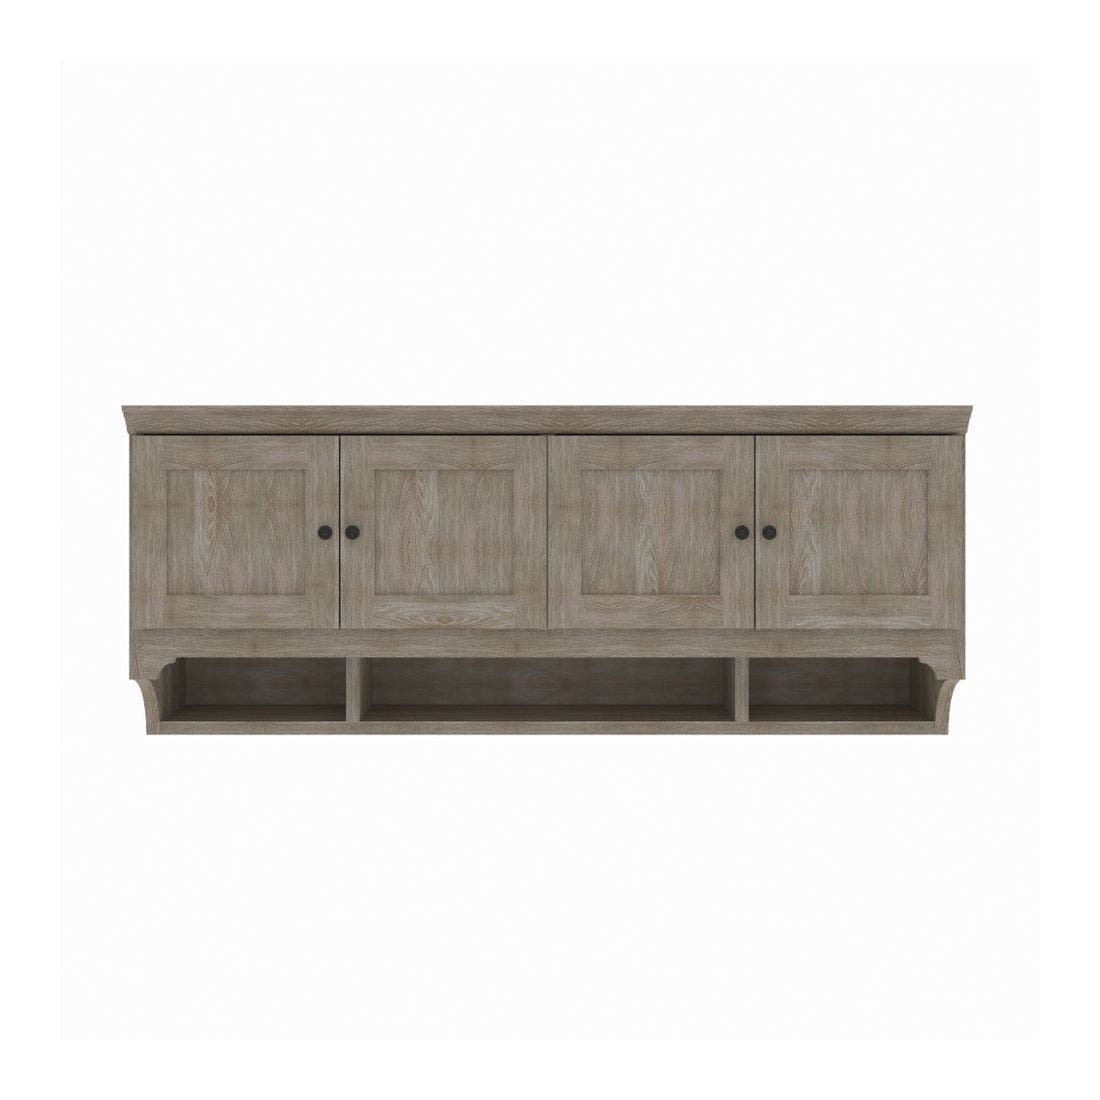 19144623-seaspell-plus-furniture-storage-organization-wall-shelving-storage-01